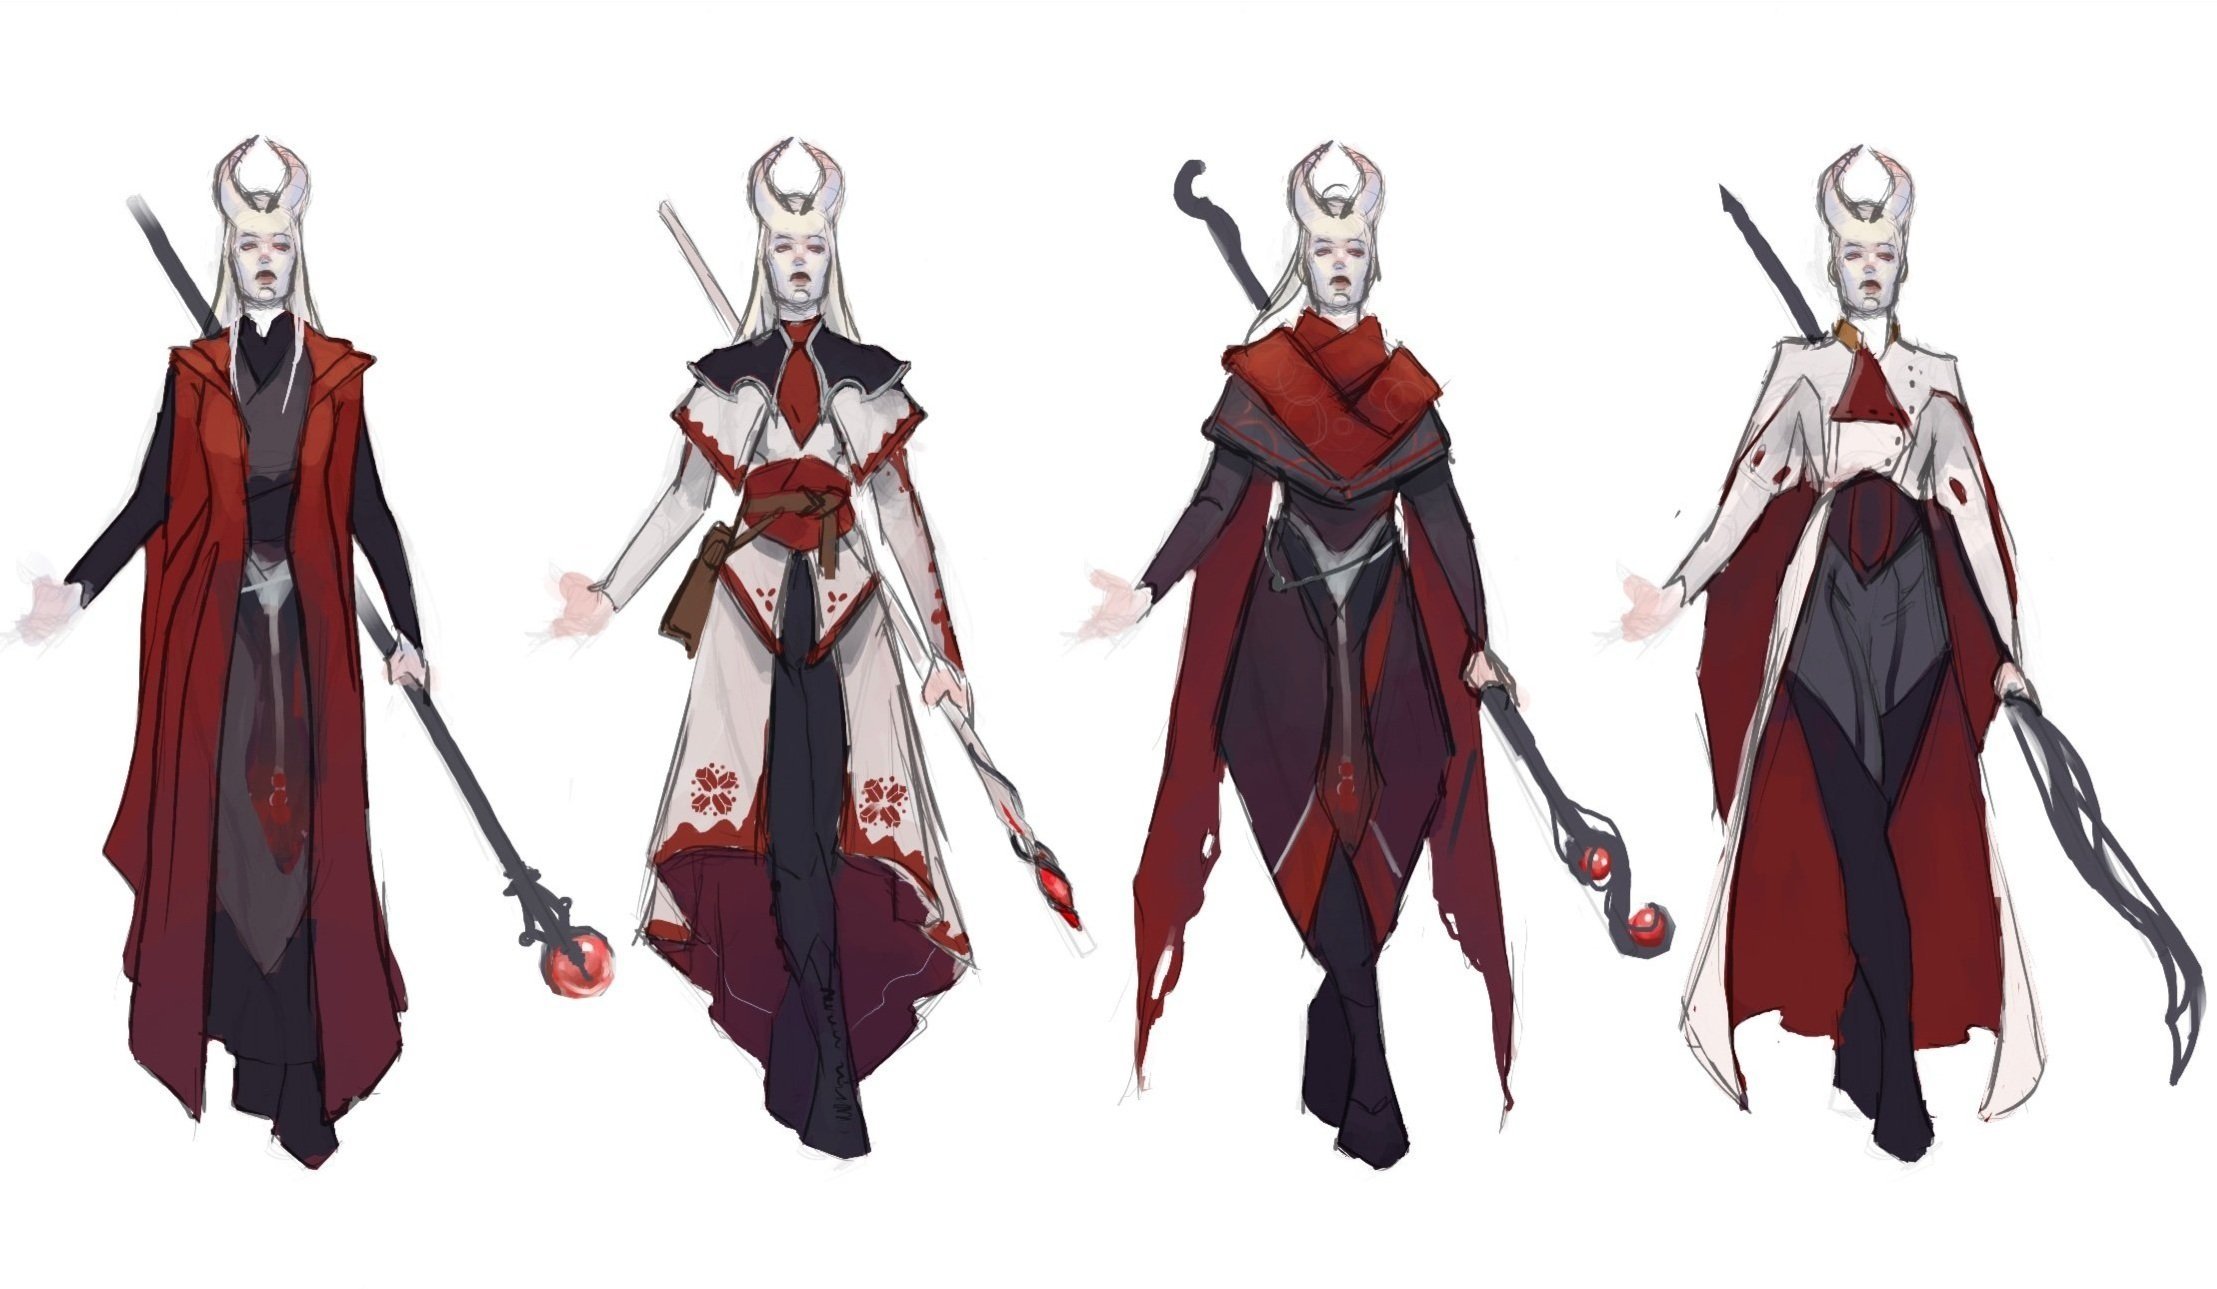 Blood Magic Wizard - Concepts